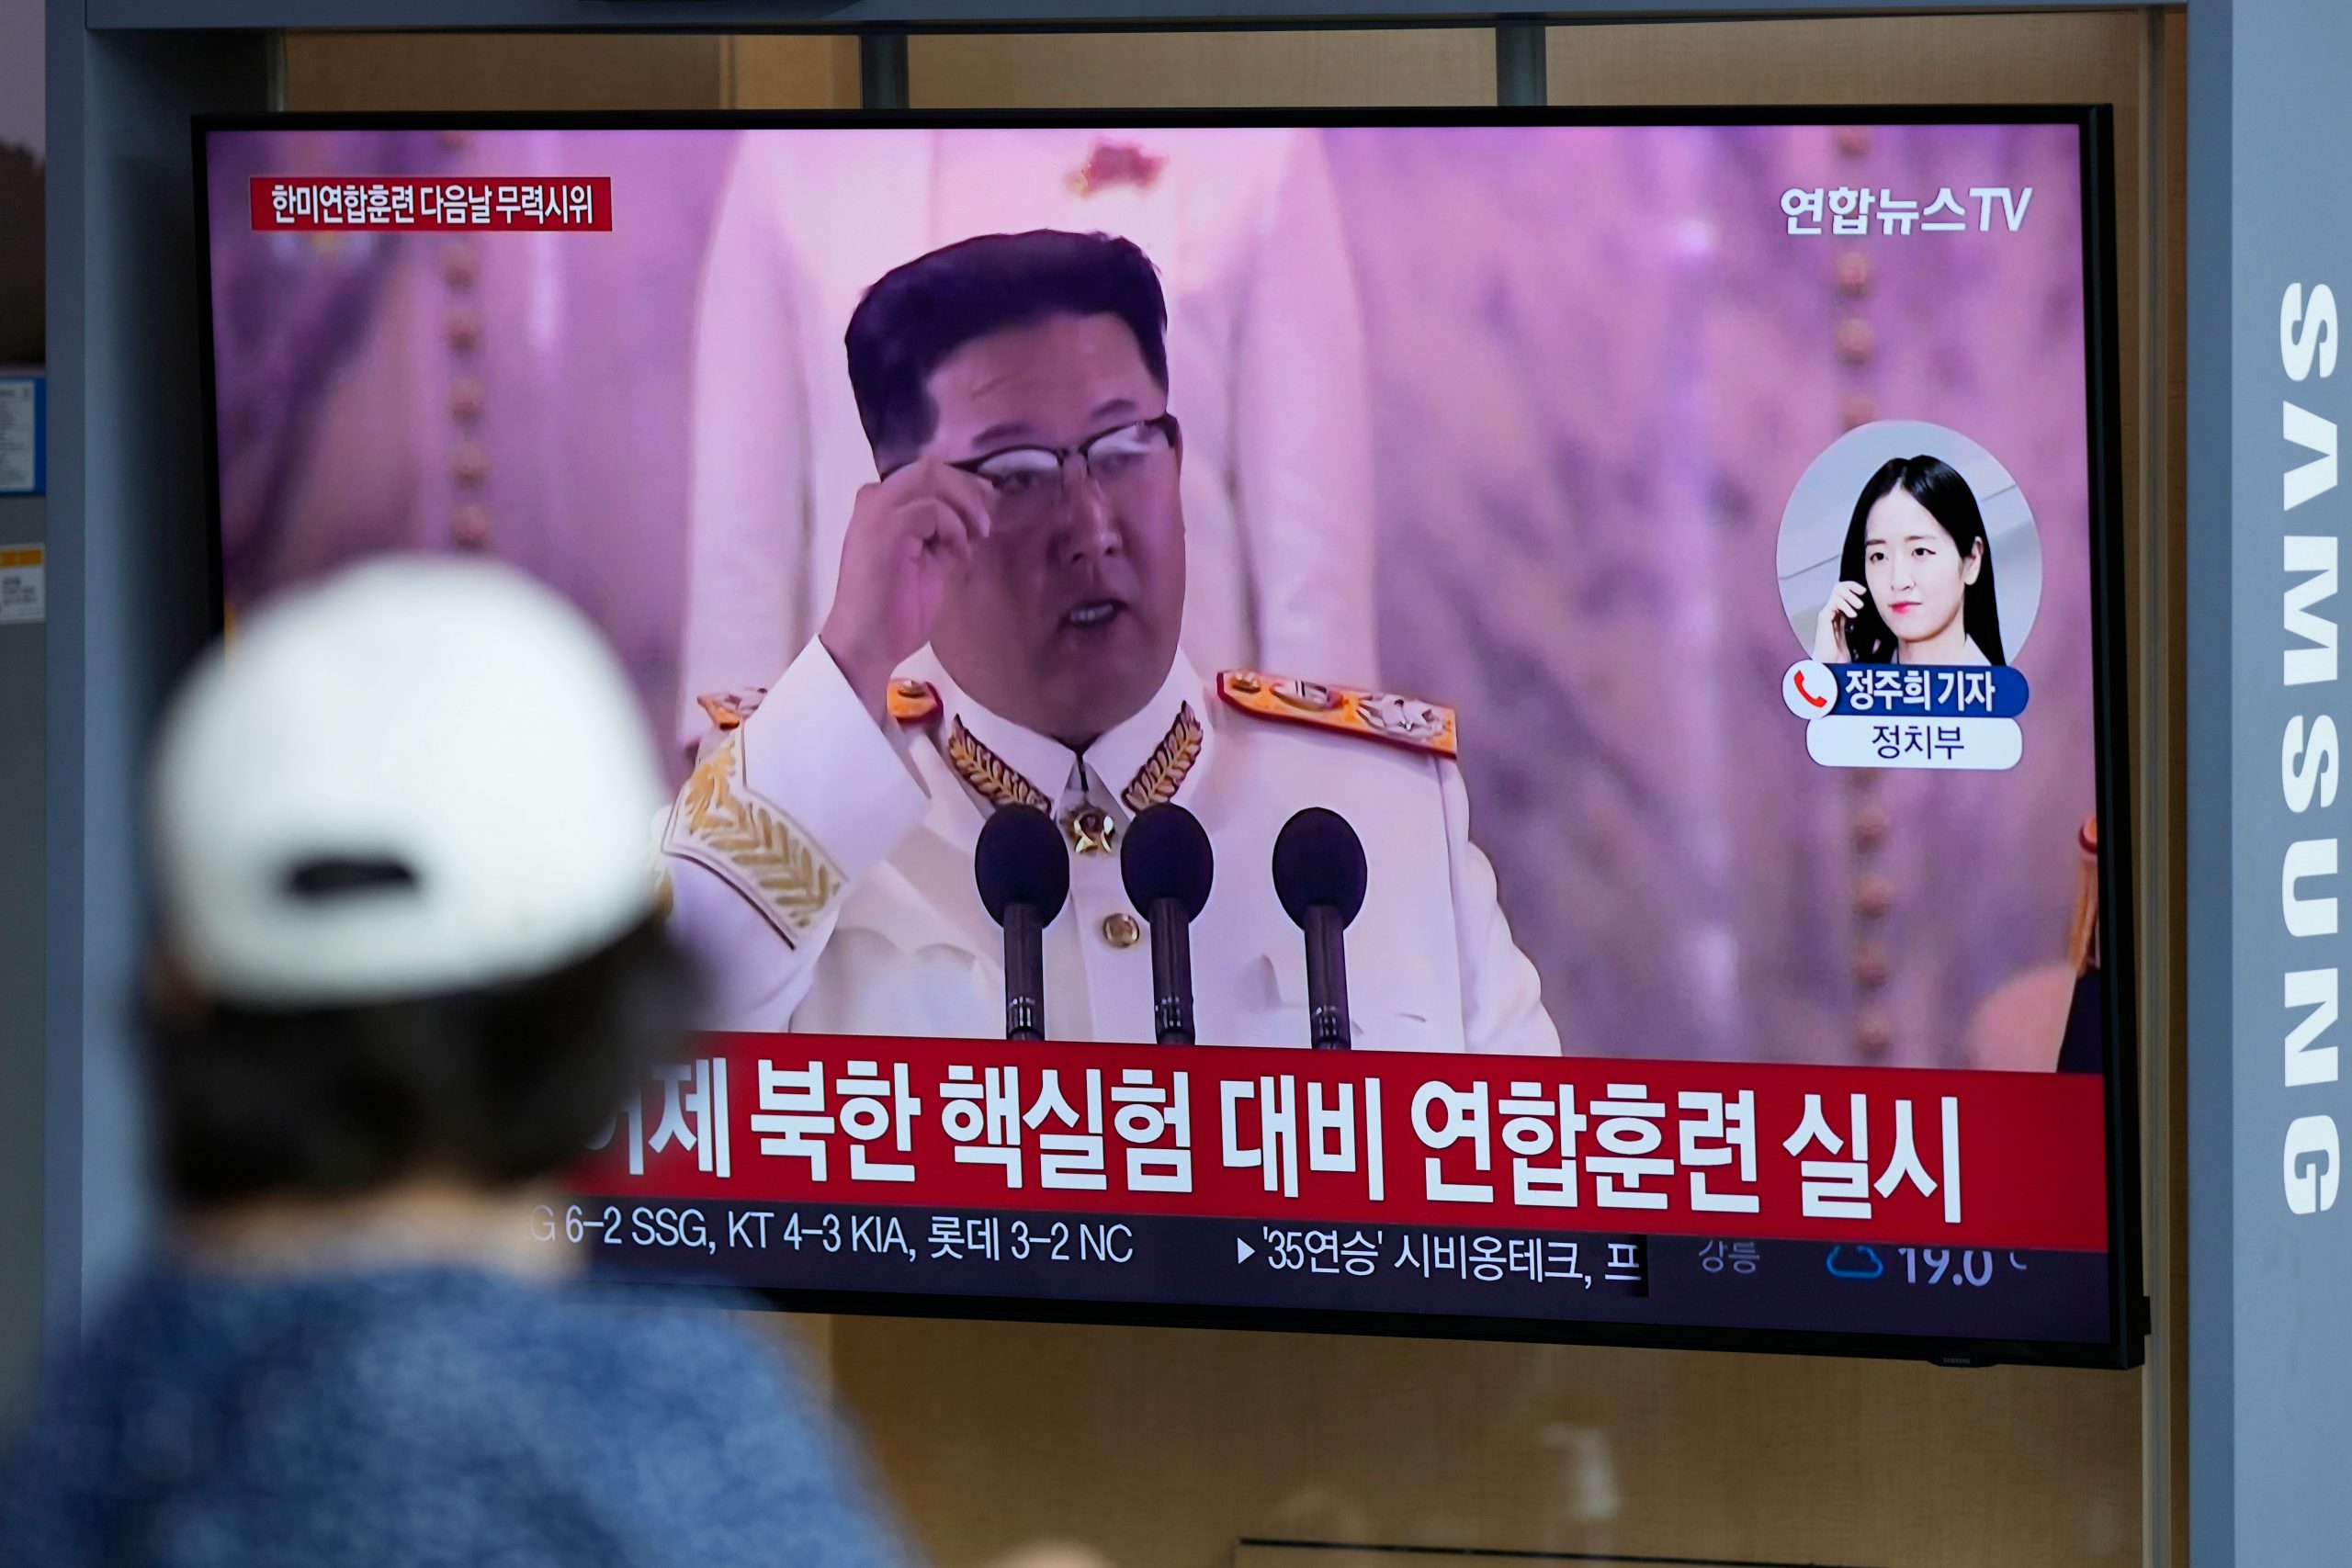 North Korea fires 2 ballistic missiles as US VP Kamala Harris leaves South Korea